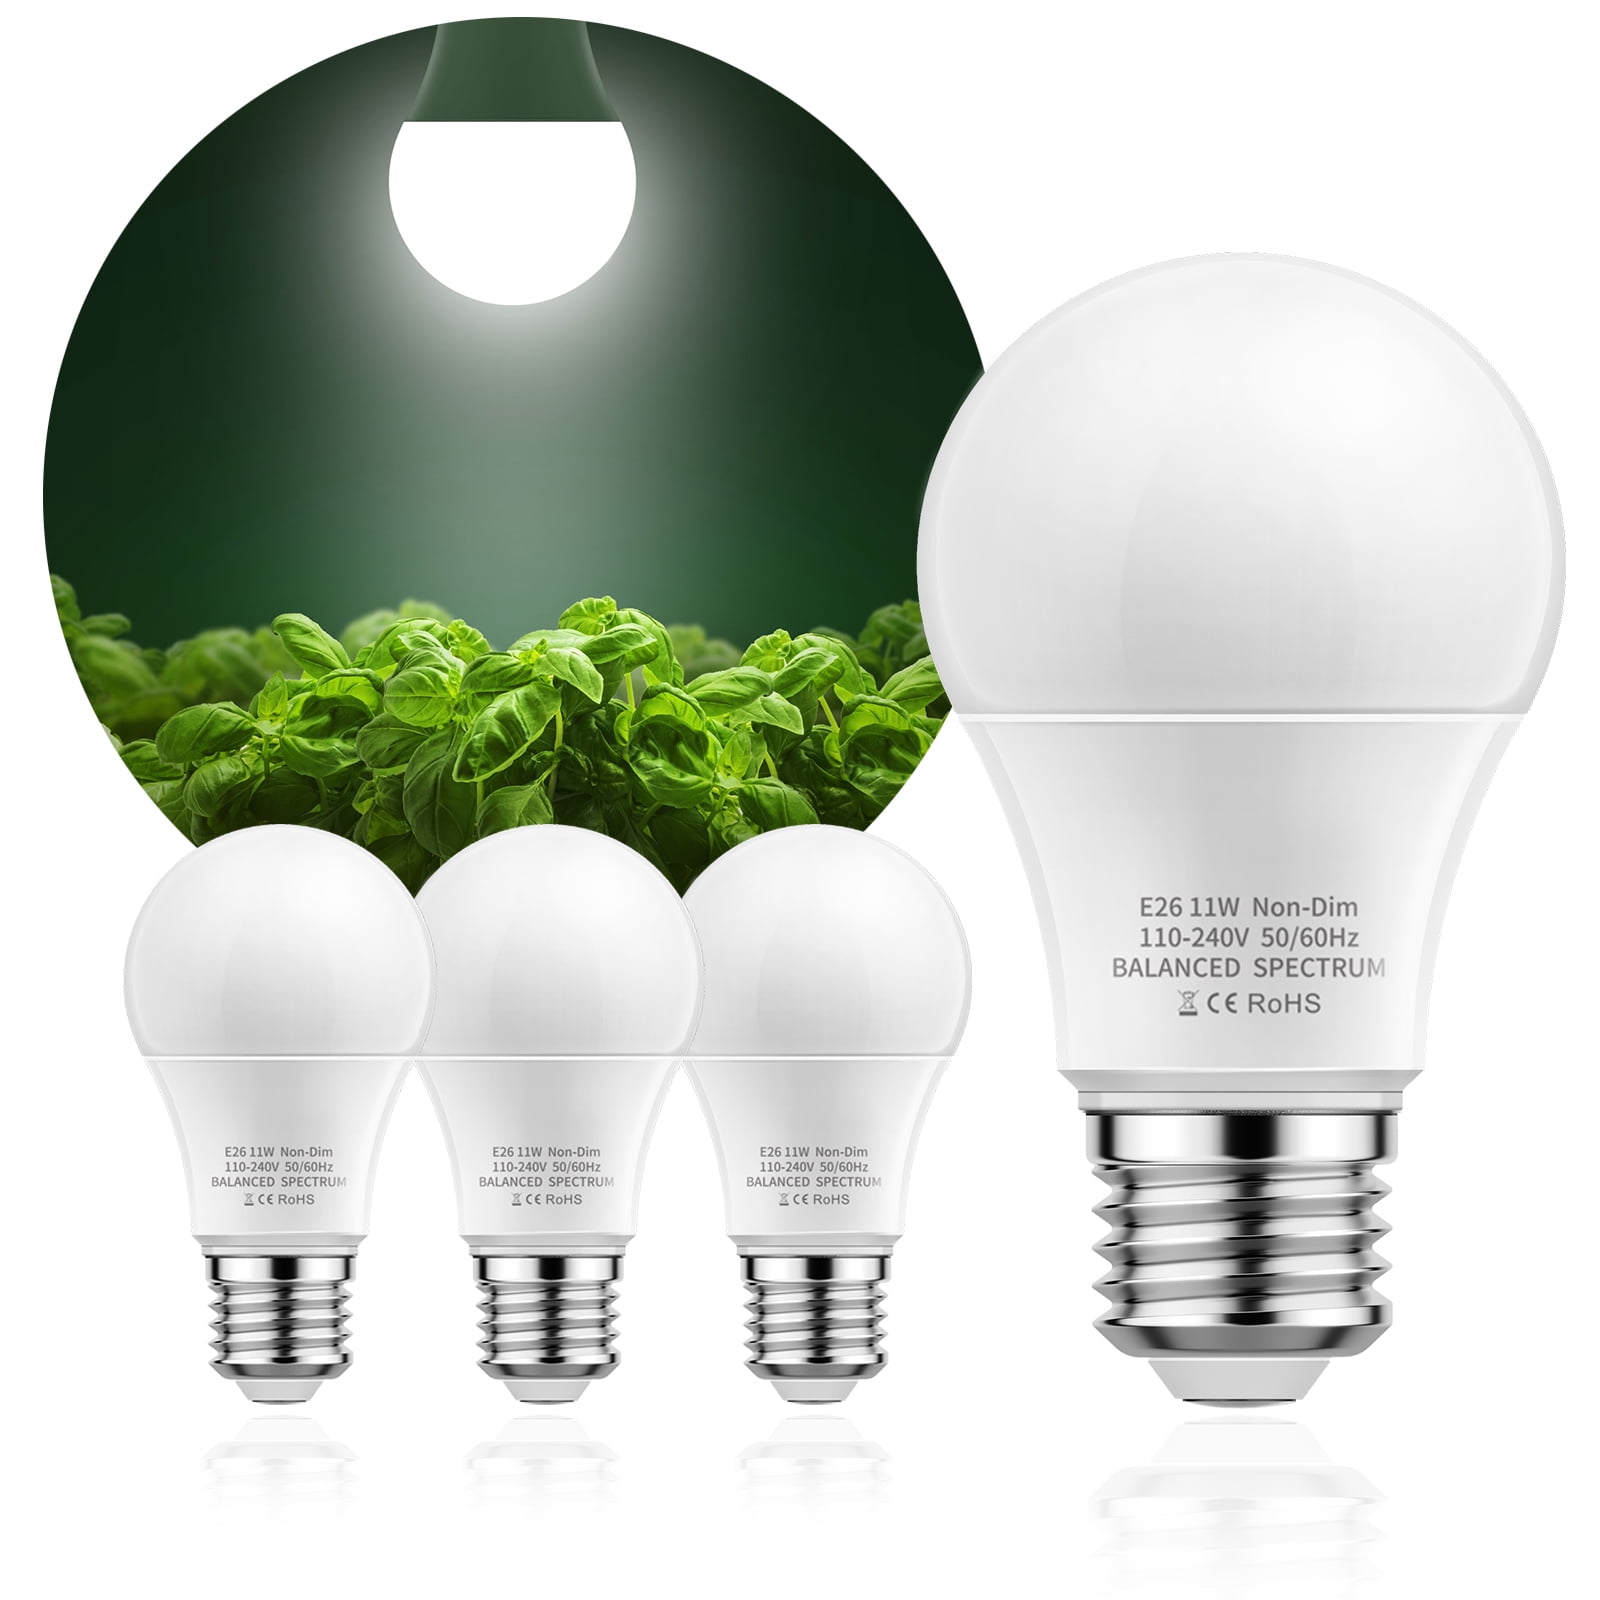 YANSUN Grow Light Bulbs, LED Grow Light Bulb A19 Full Light Bulb, Plant Light Bulbs E26 Base, 11W Grow Bulb 100W Equivalent, Grow Light for Indoor Plants, Seed Starting,